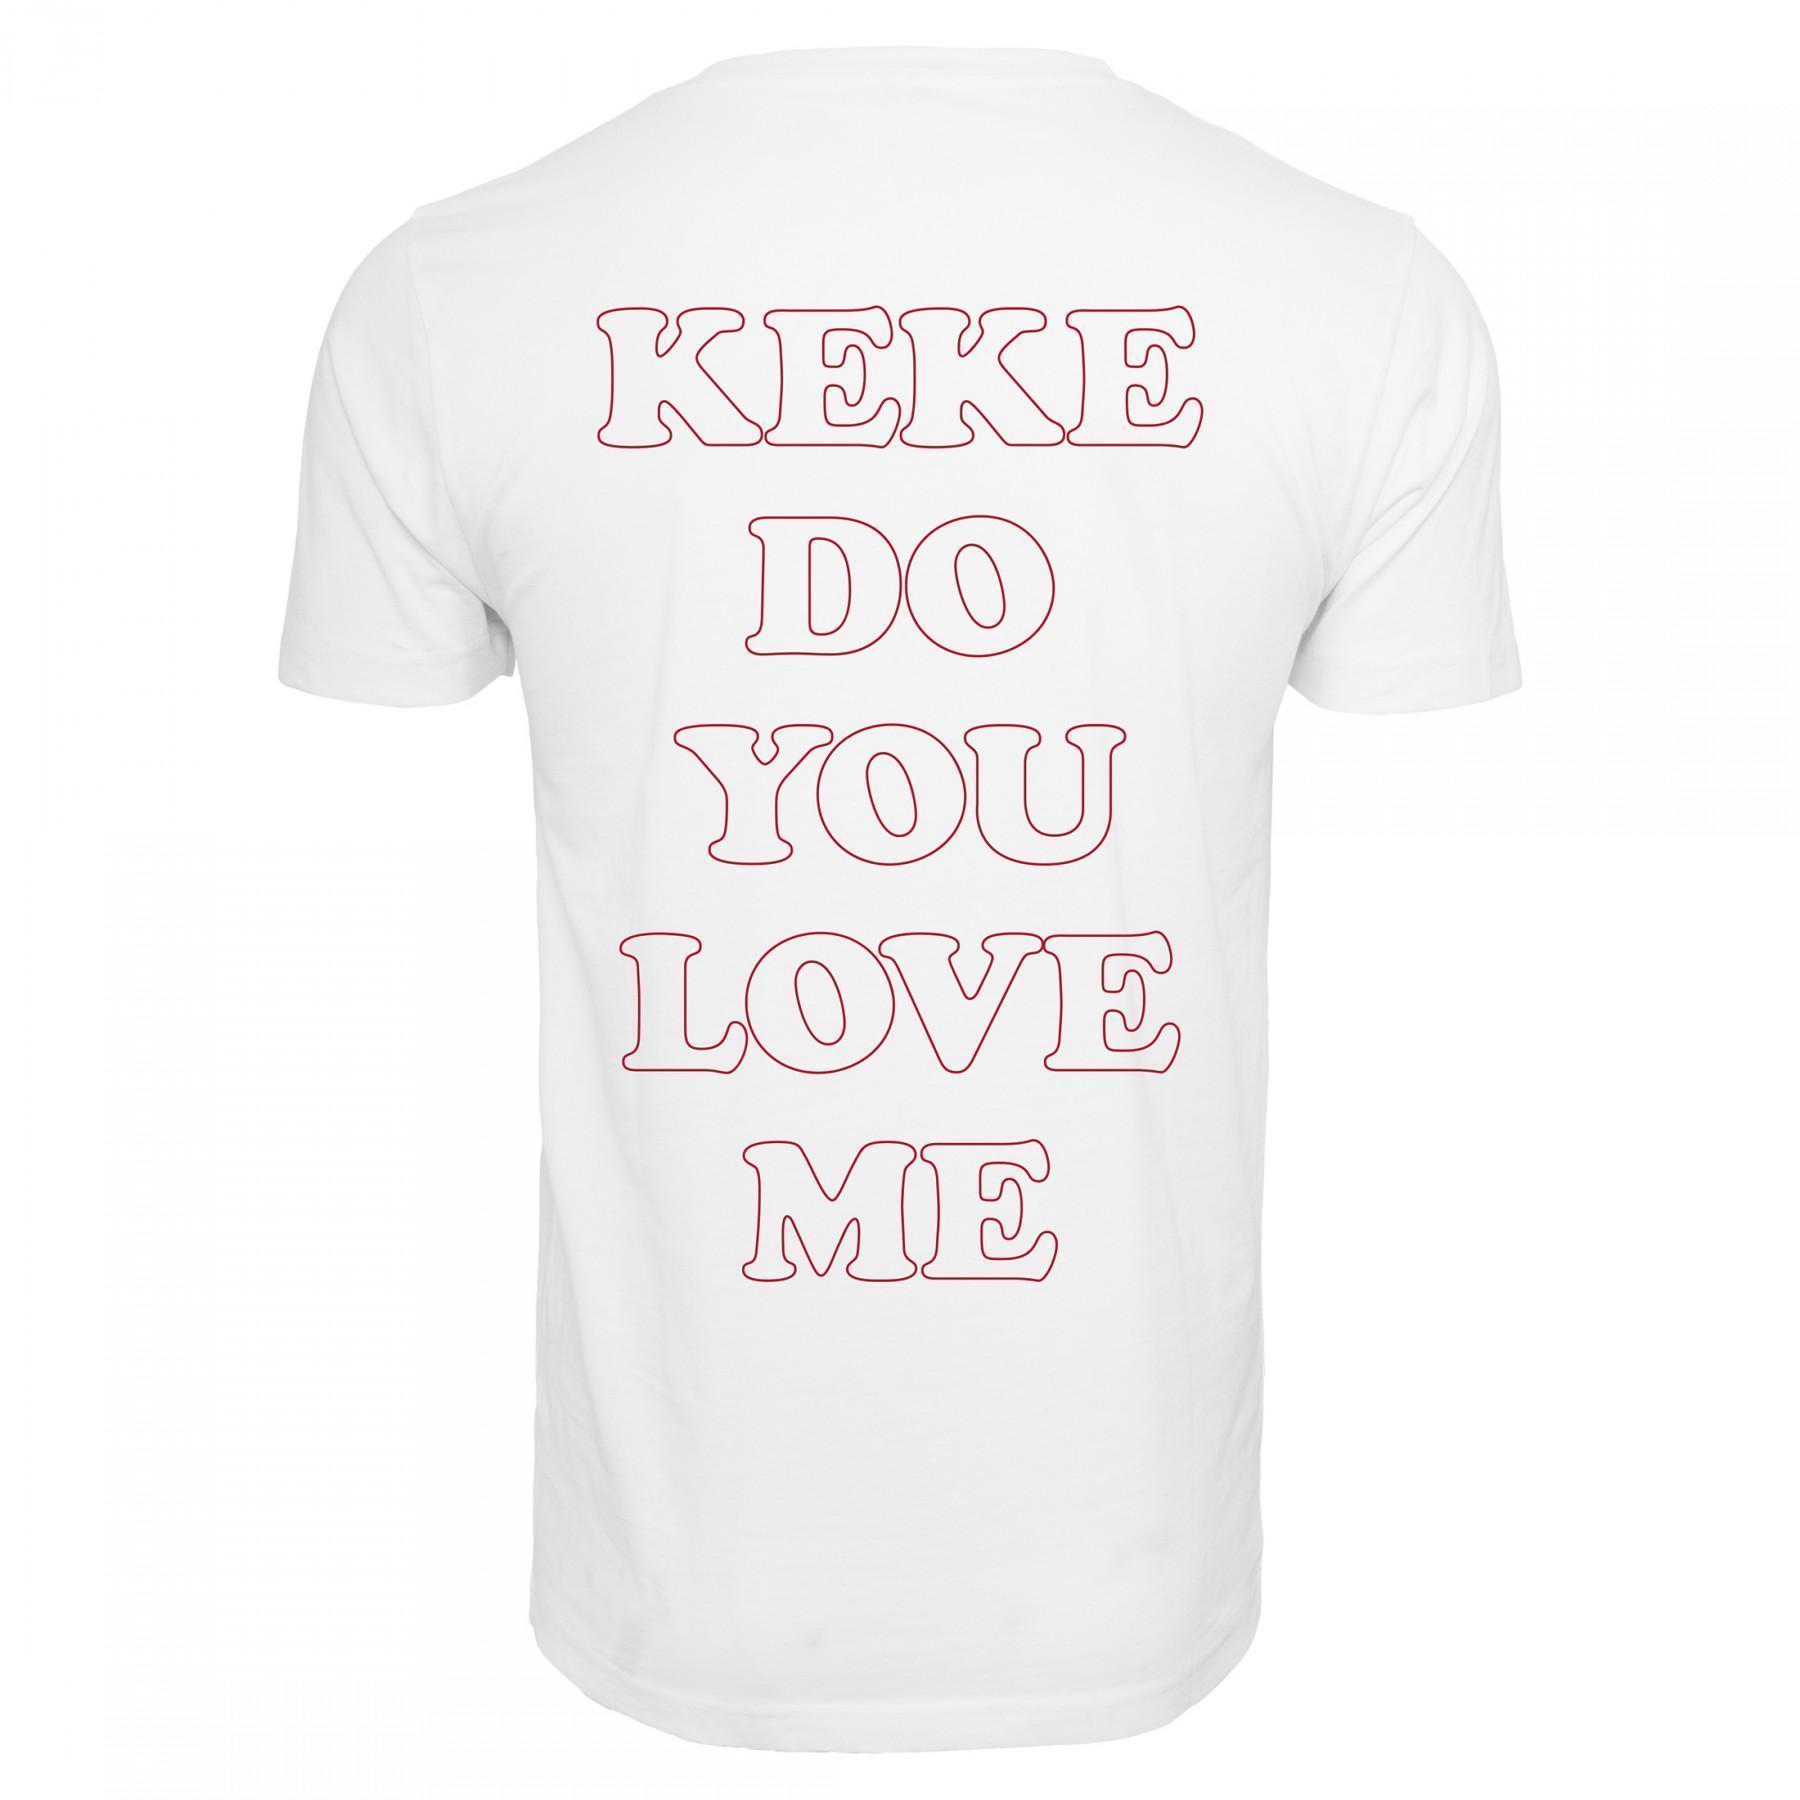 T-shirt Mister Tee keke